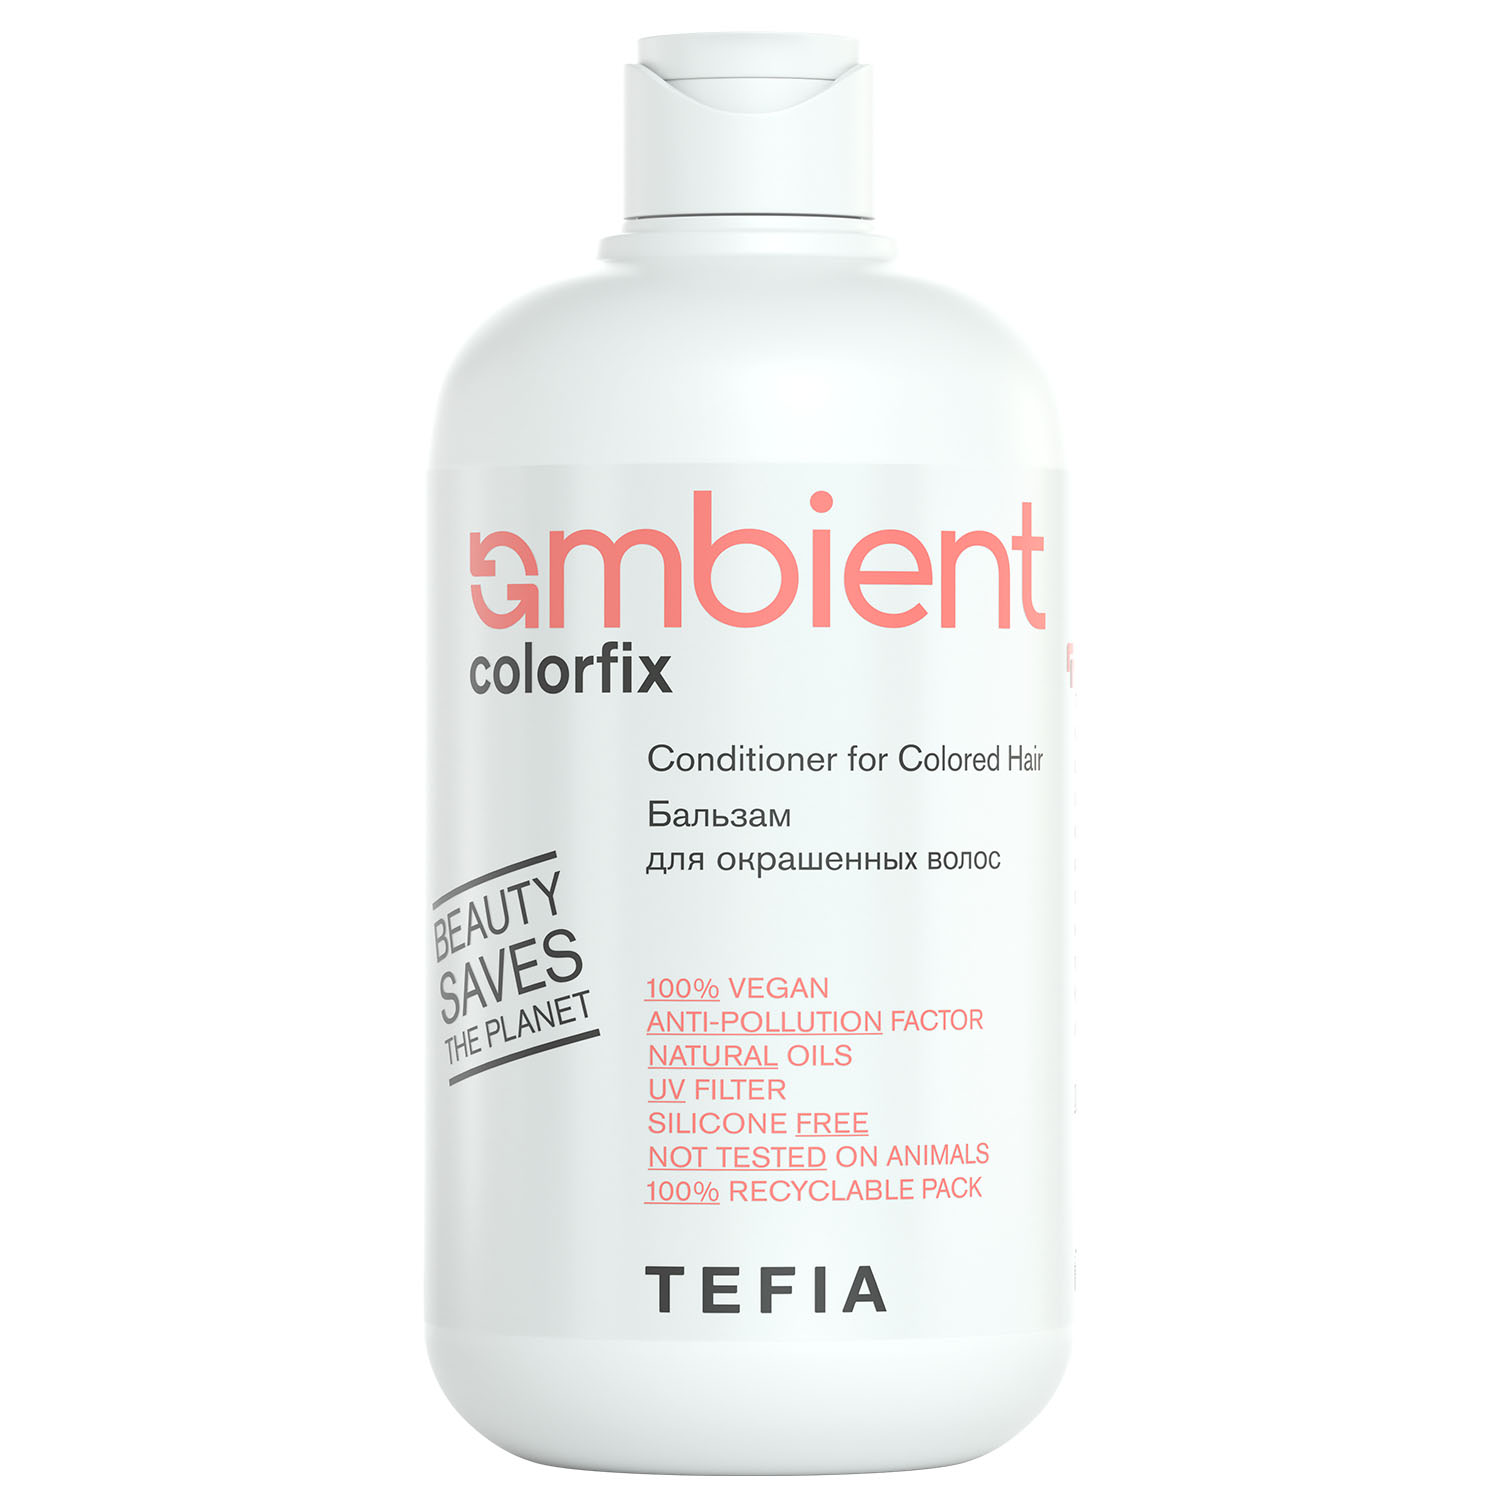 Tefia Бальзам для окрашенных волос Conditioner for Colored Hair, 250 мл (Tefia, Ambient) tefia шампунь для окрашенных волос shampoo for colored hair 250 мл tefia ambient